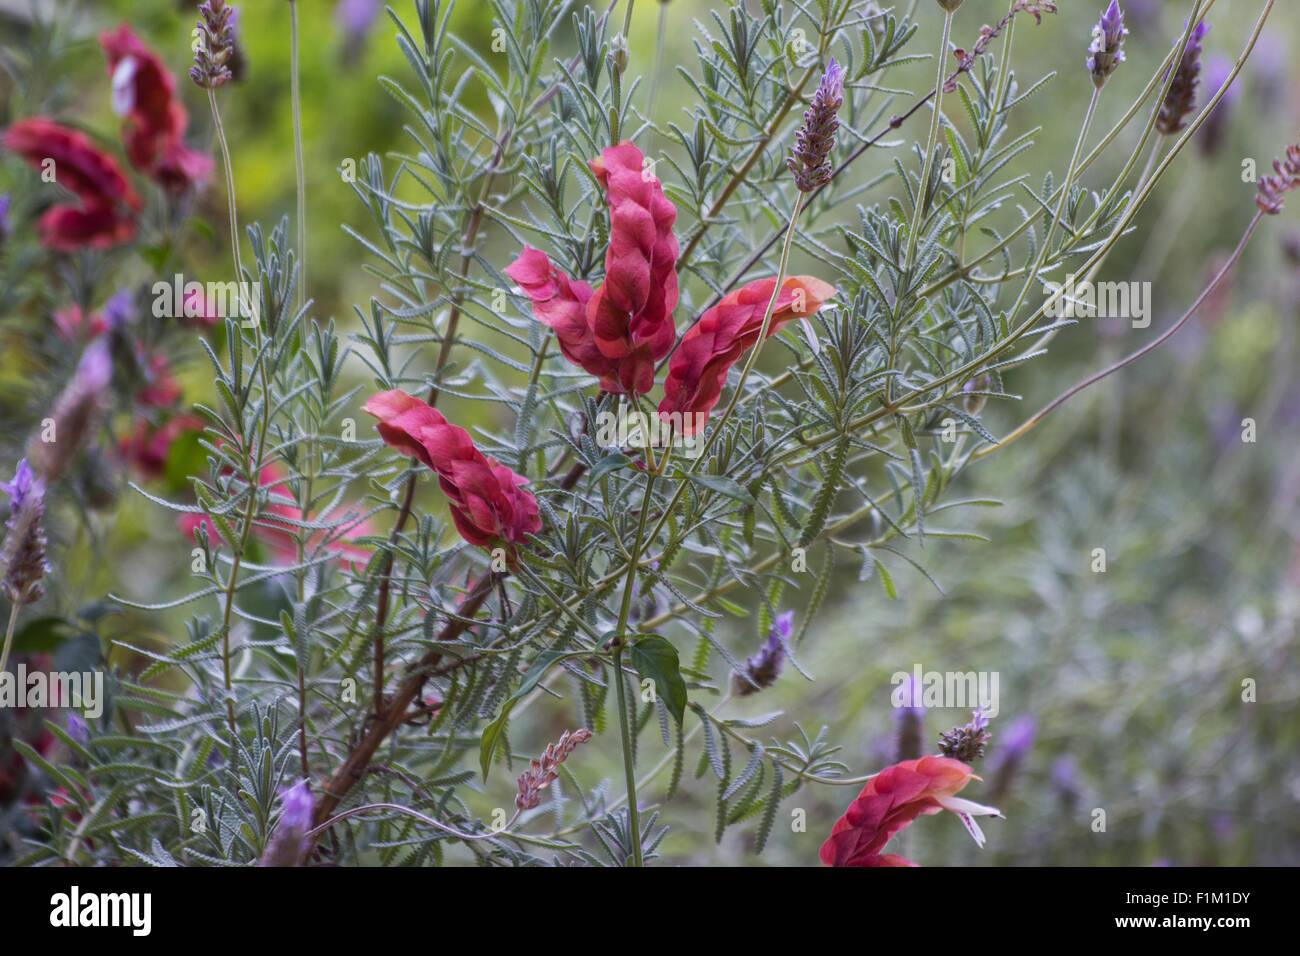 Mexican shrimp plant (Justicia brandegeeana) and Lavender (Lavandula dentata) flowers in a garden Stock Photo